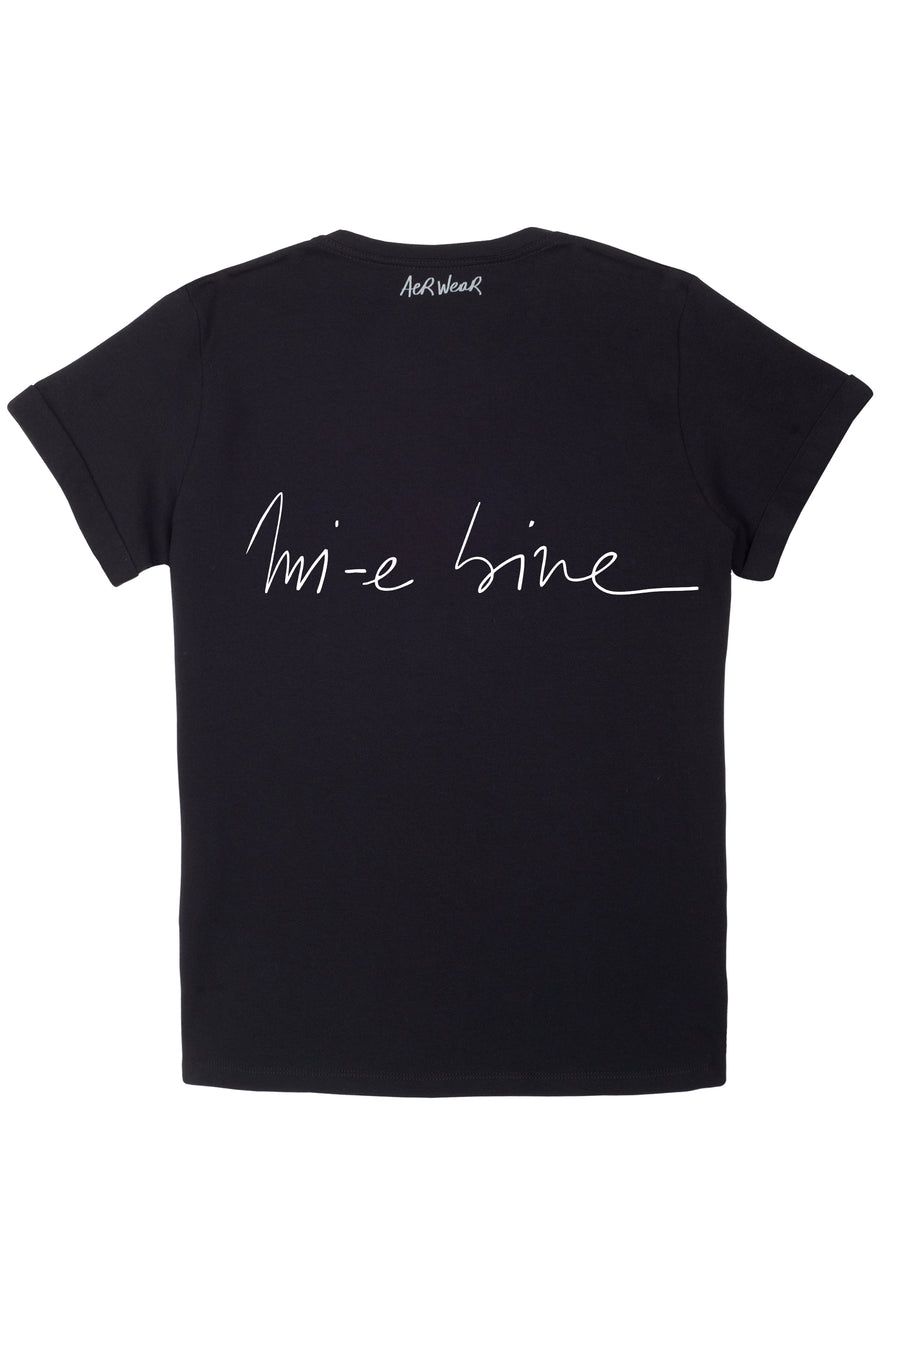 MI-E BINE Tshirt Black version